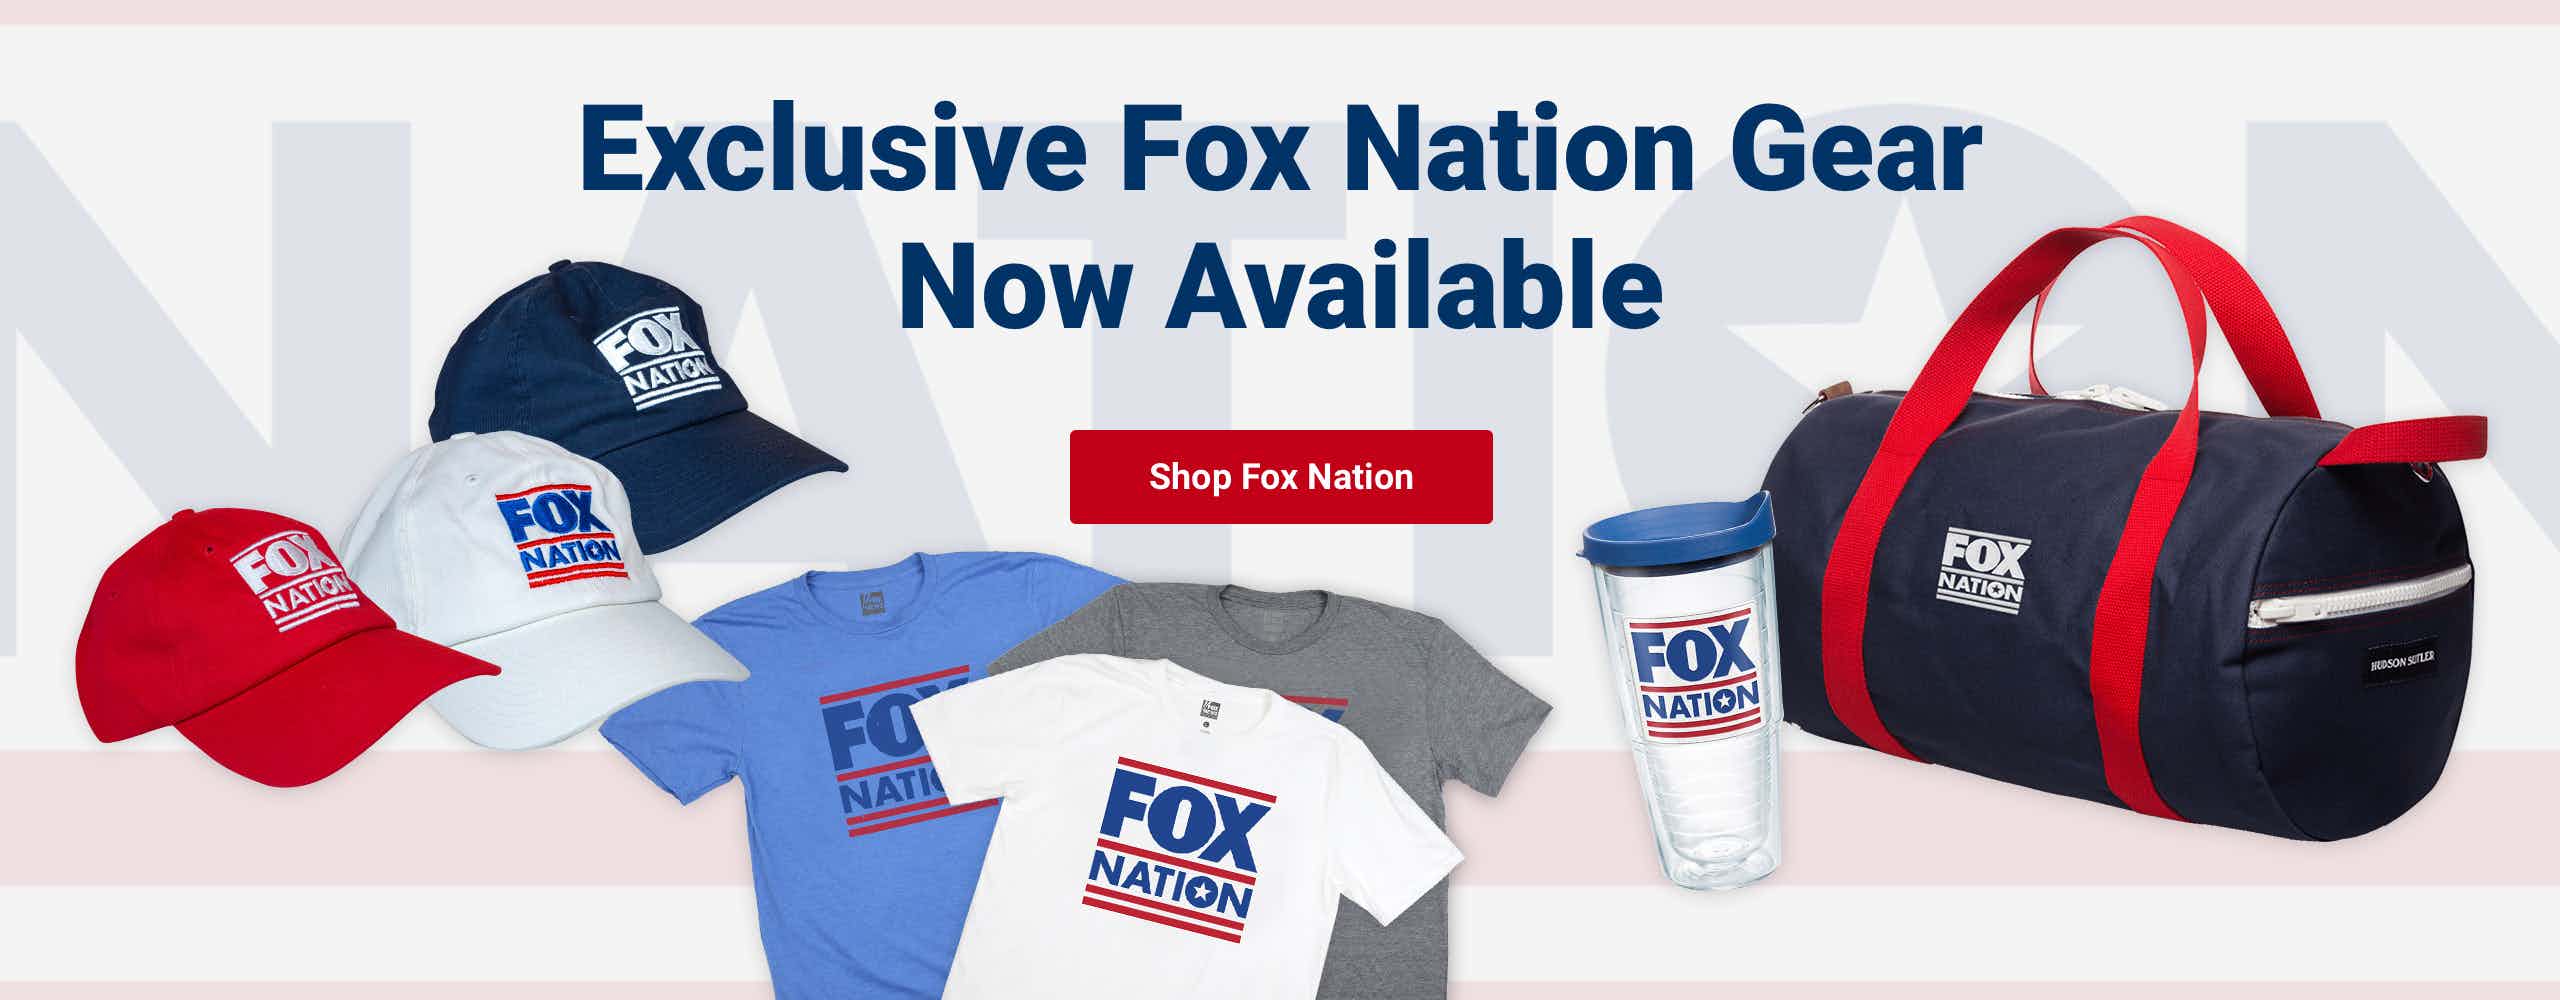 Fox News Fox Nation Gear